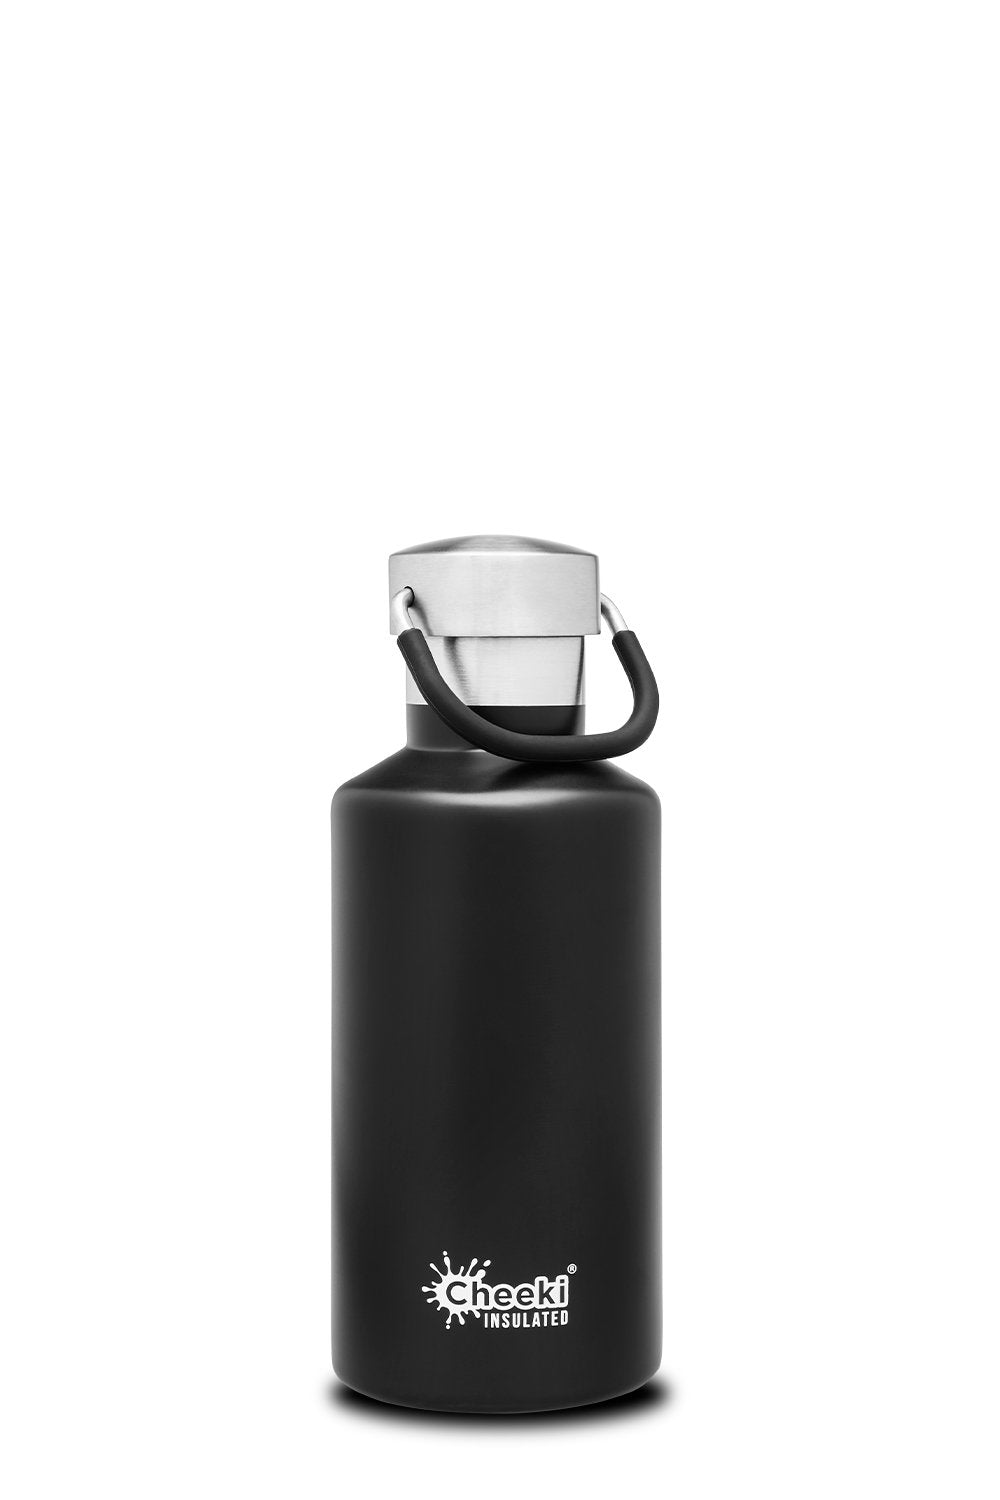 Cheeki Classic Insulated Bottle Stainless Steel Matte Black 400ml